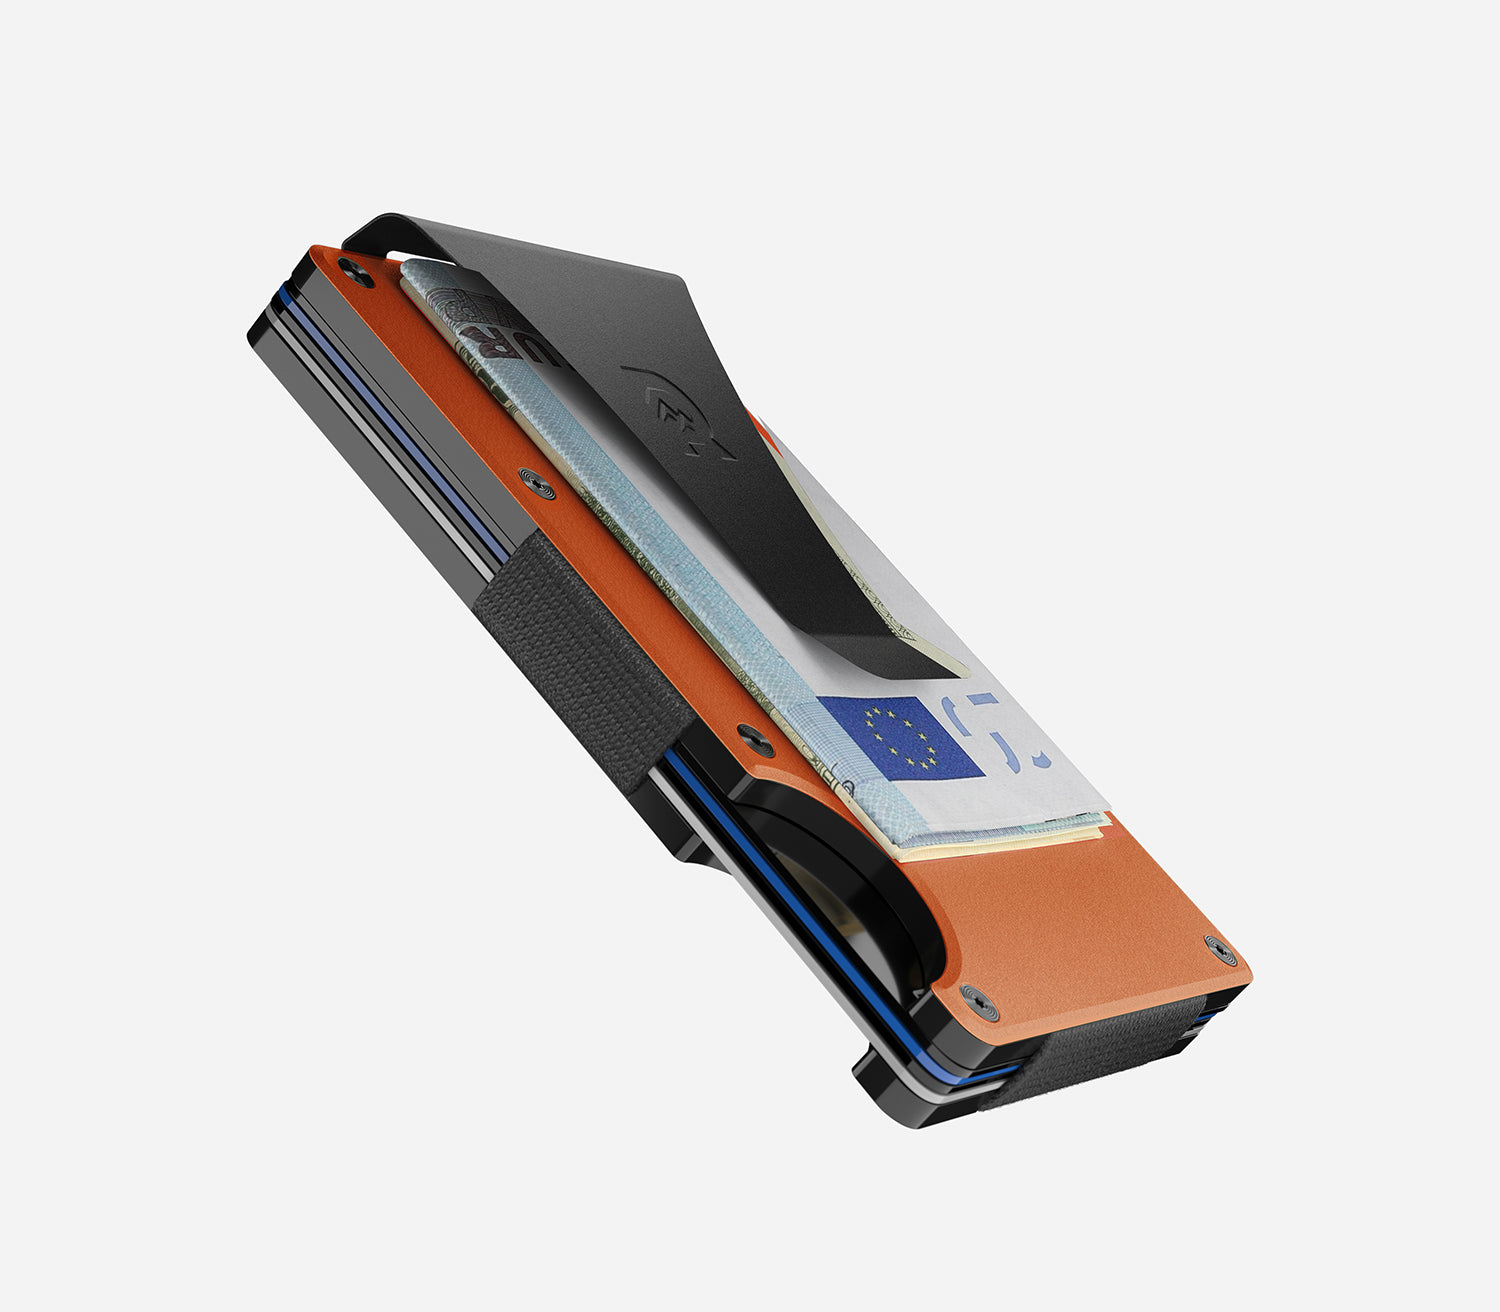 The Ridge Wallet Aluminum: Cash Strap Basecamp Orange AUWAI101301 - Best Buy